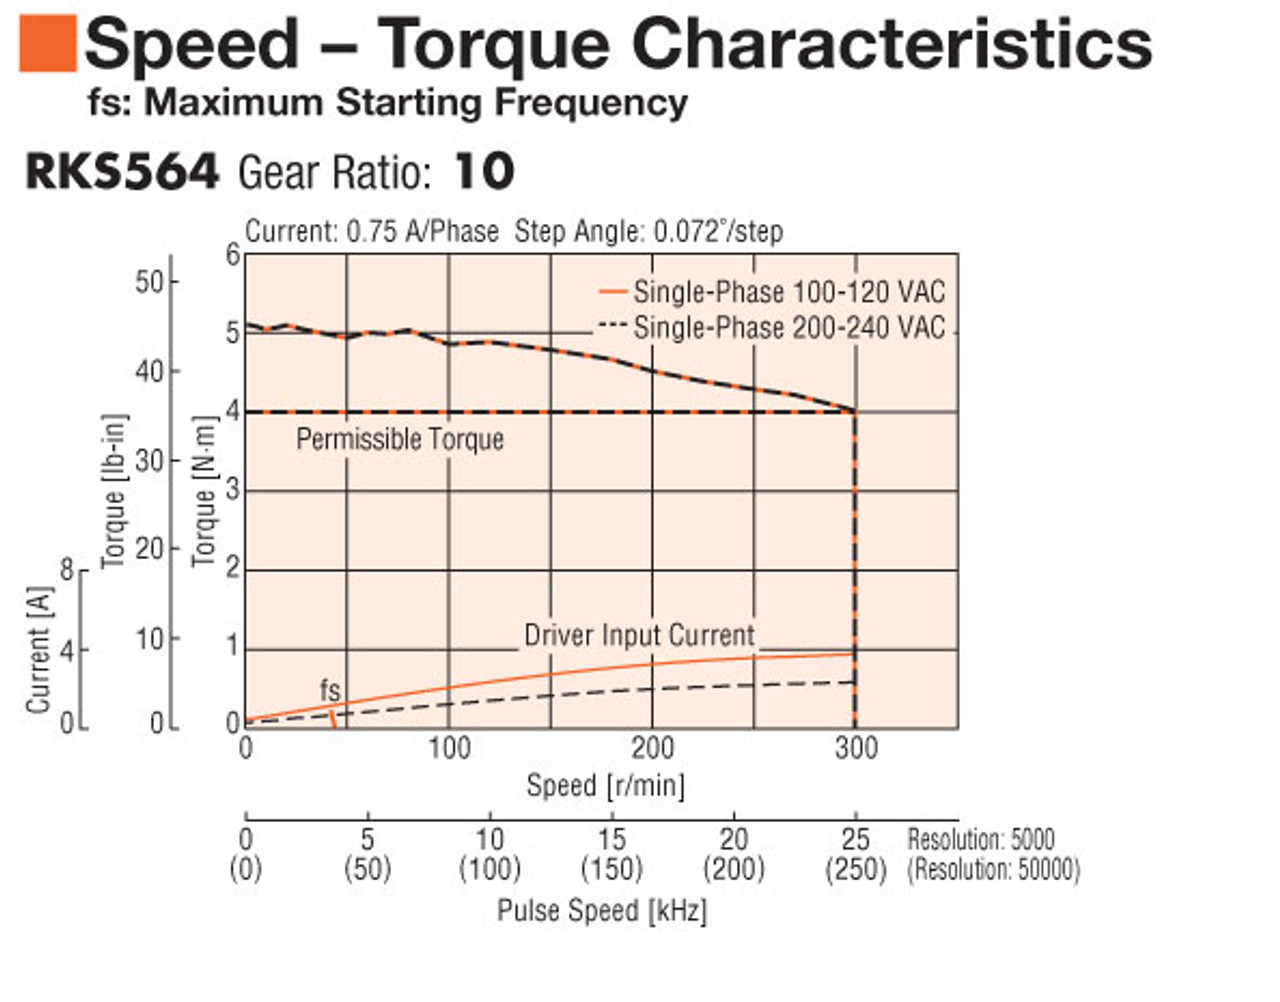 PKE564MC-TS10 - Speed-Torque